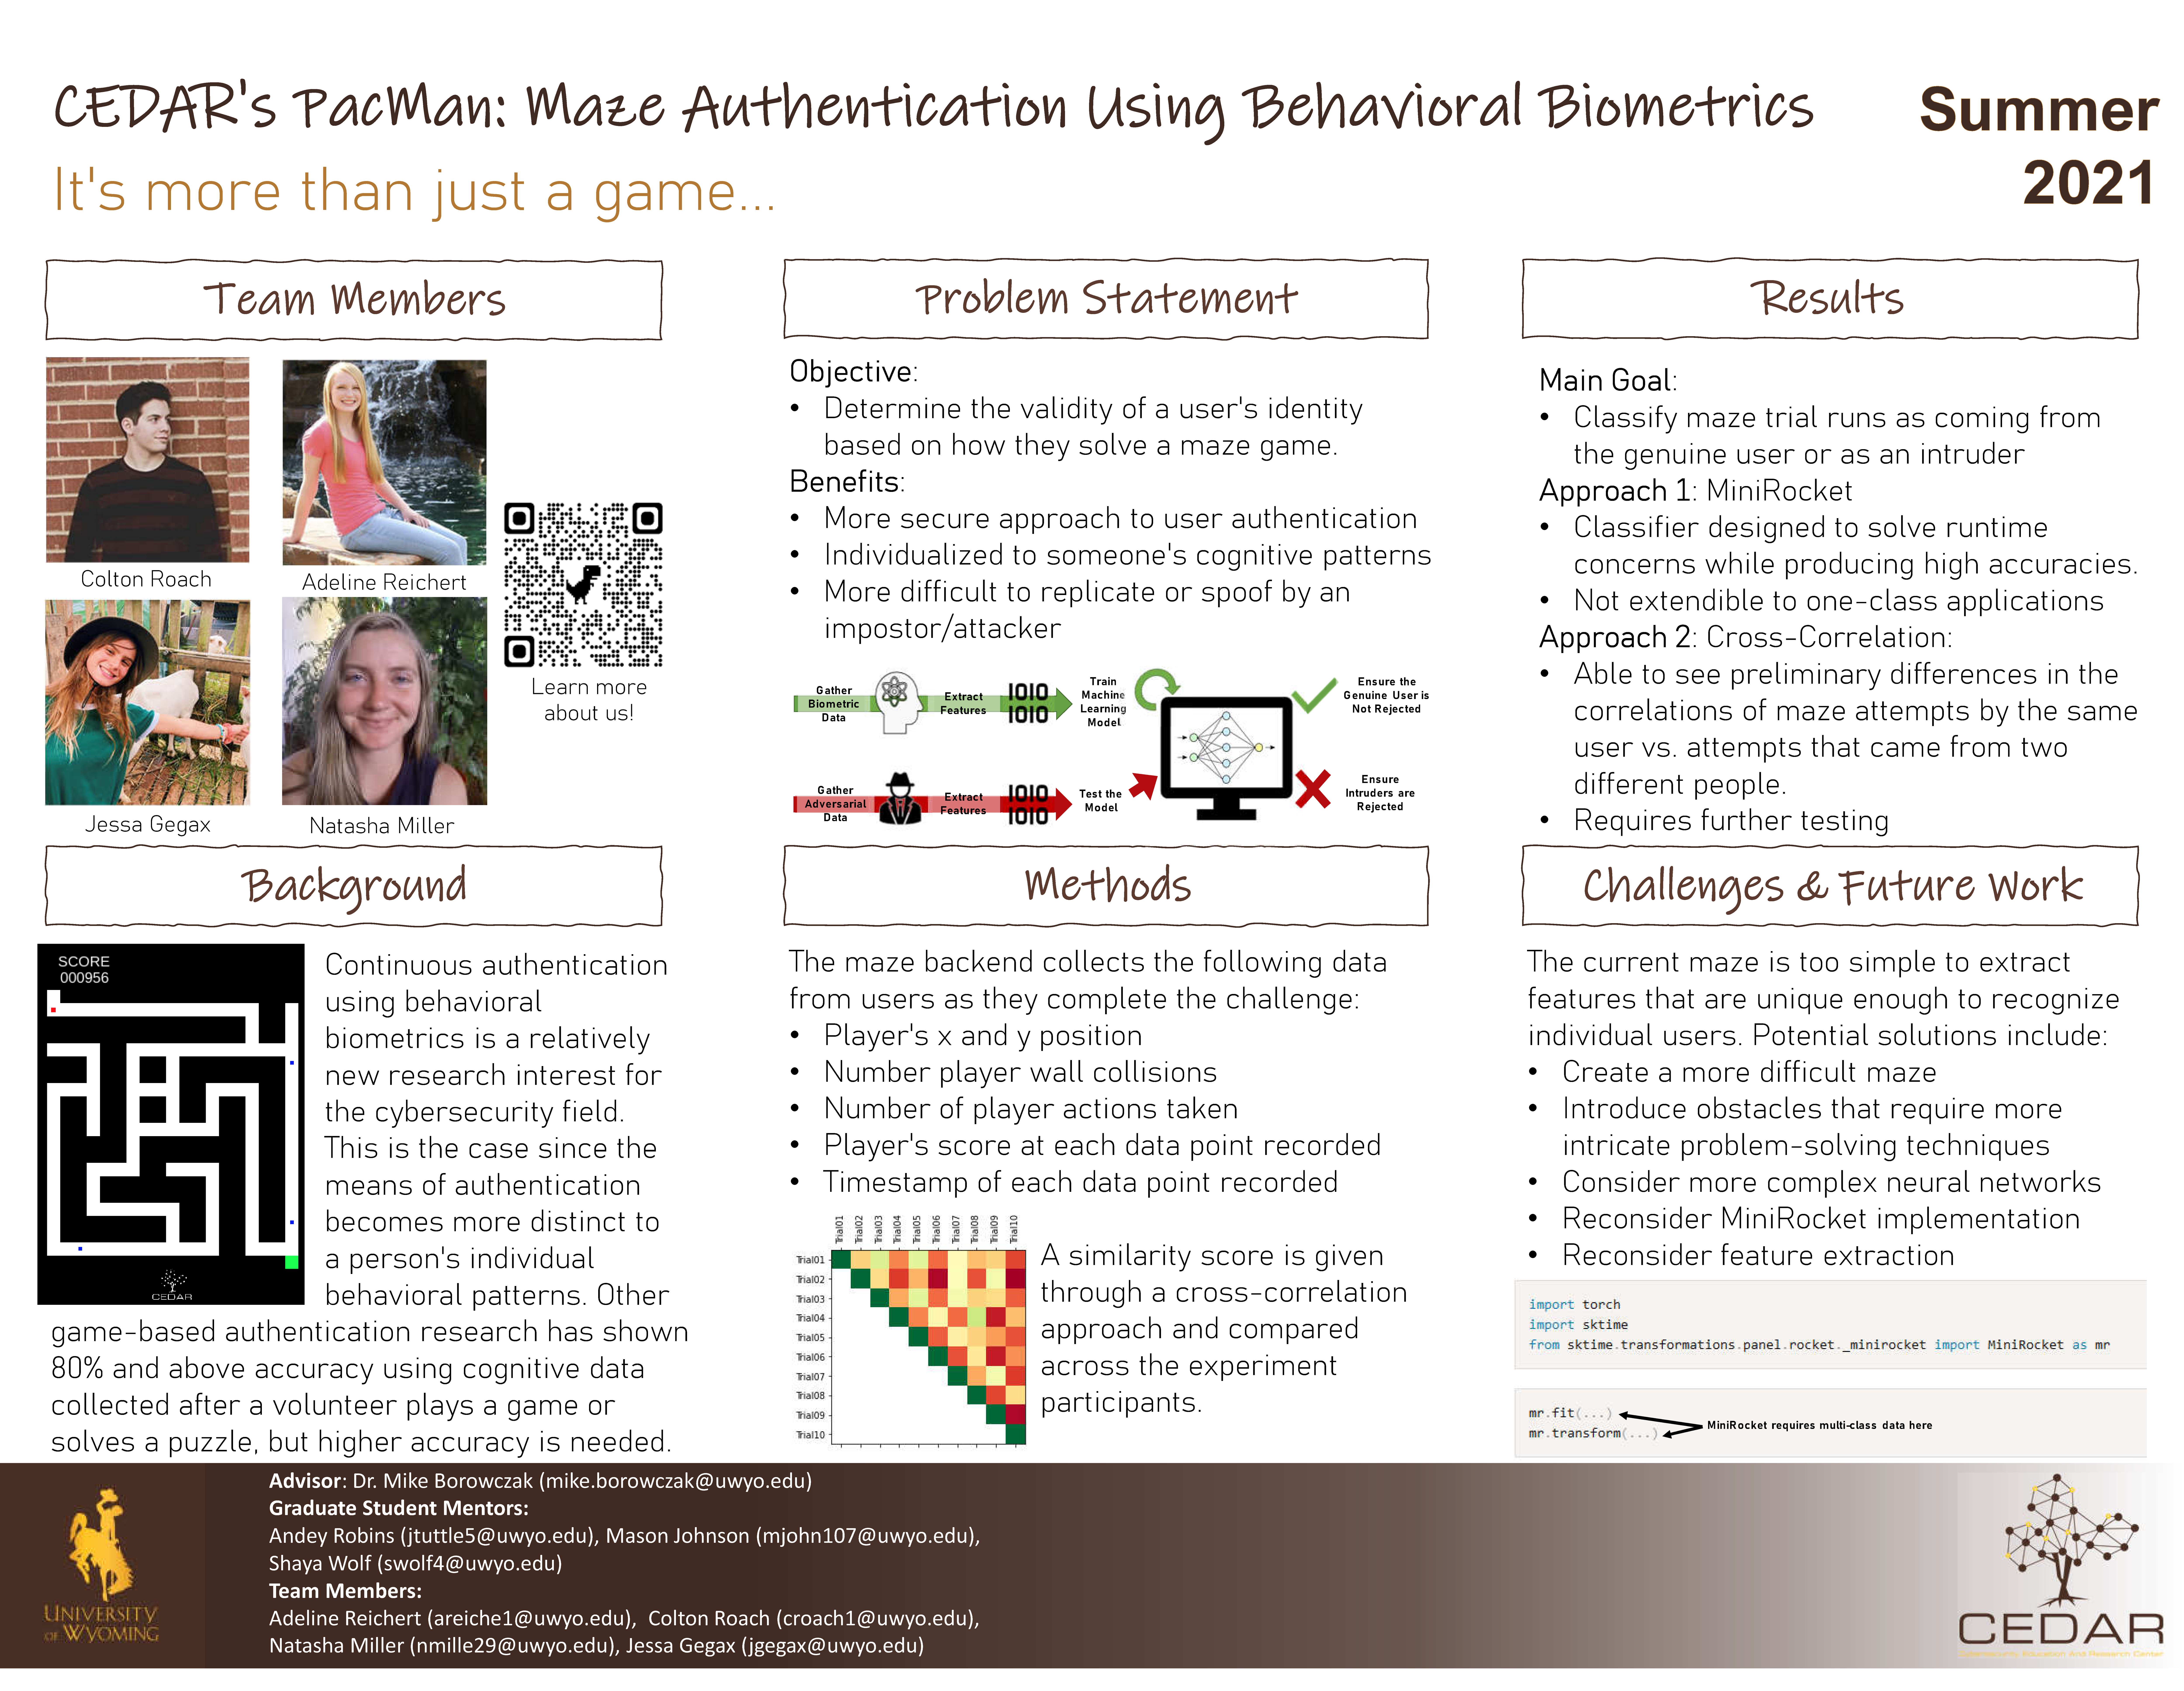  Poster for CEDAR PacMan: Maze Authentication Using Behavioral Biometrics